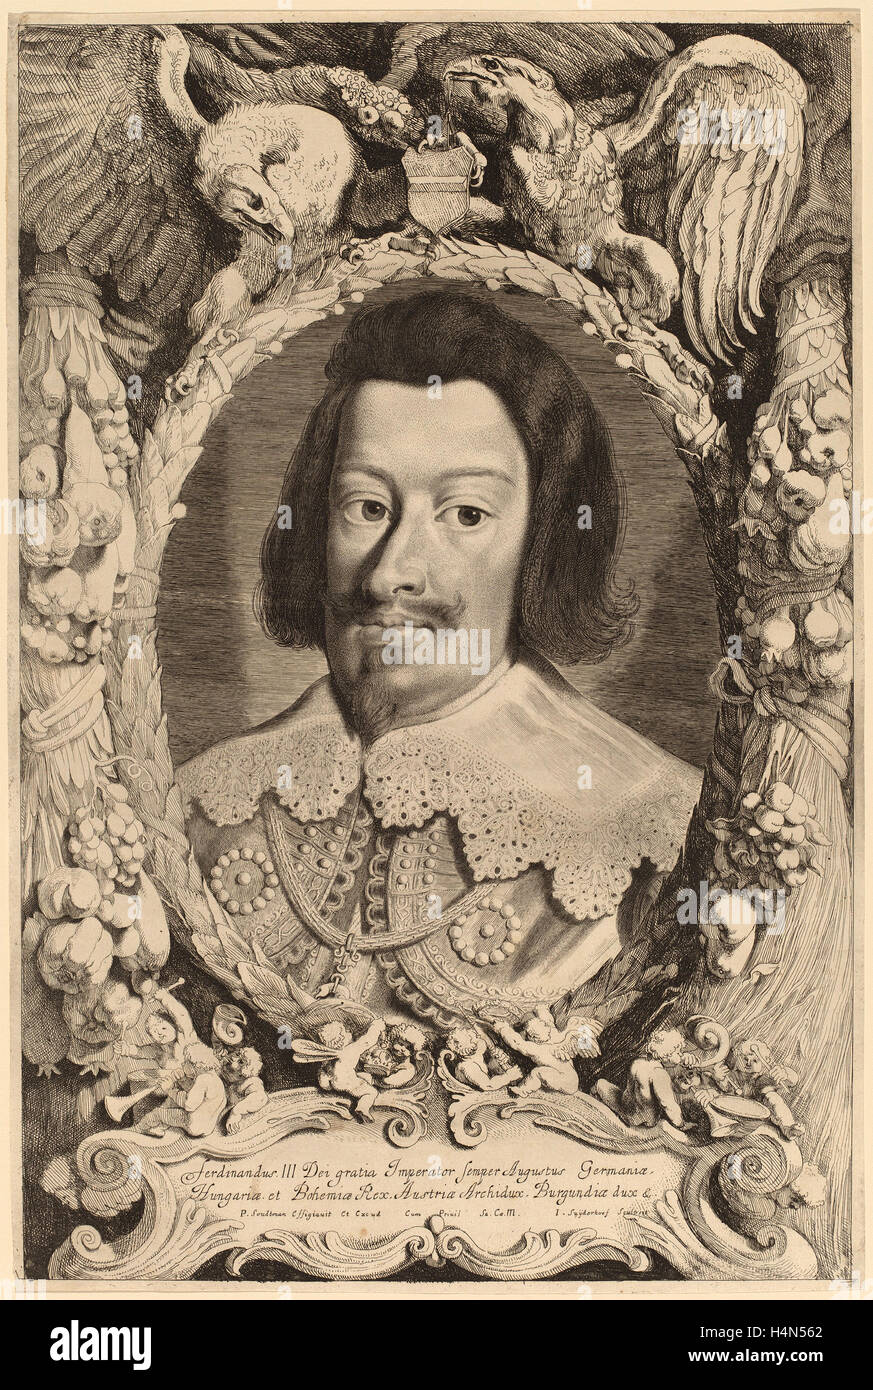 Jonas Suyderhoff after Pieter Claesz Soutman (Dutch, c. 1613 - 1686), Emperor Ferdinand III, etching and engraving Stock Photo